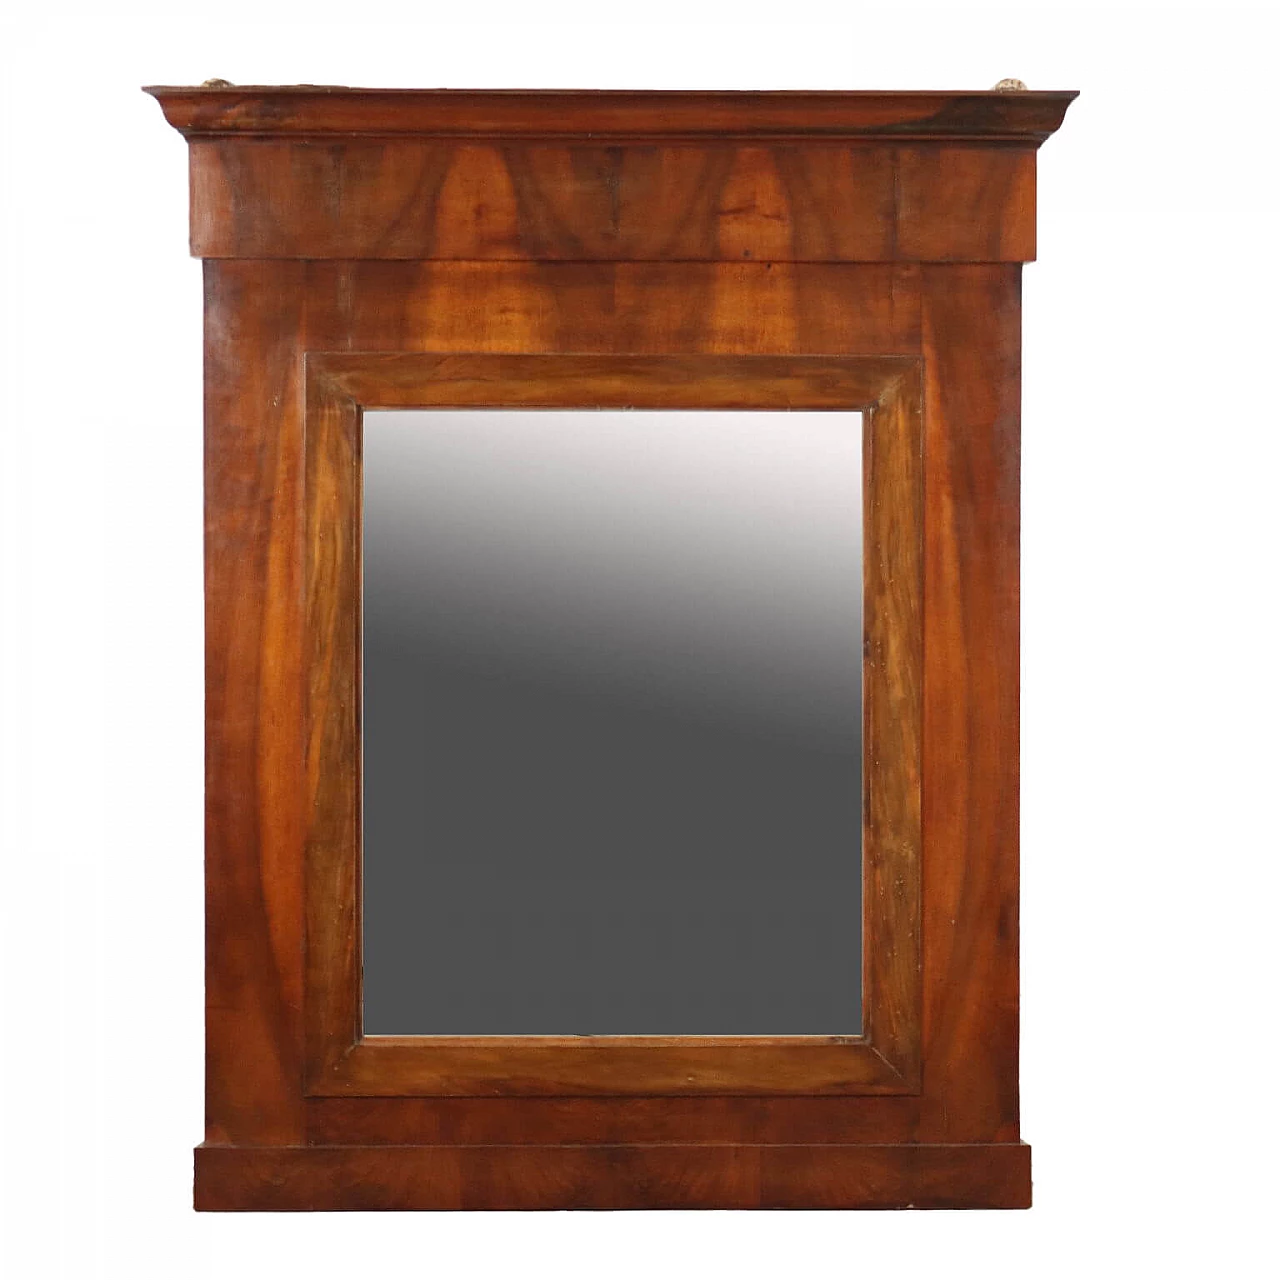 Mahogany veneered spruce mantelpiece mirror, mid-19th century 1